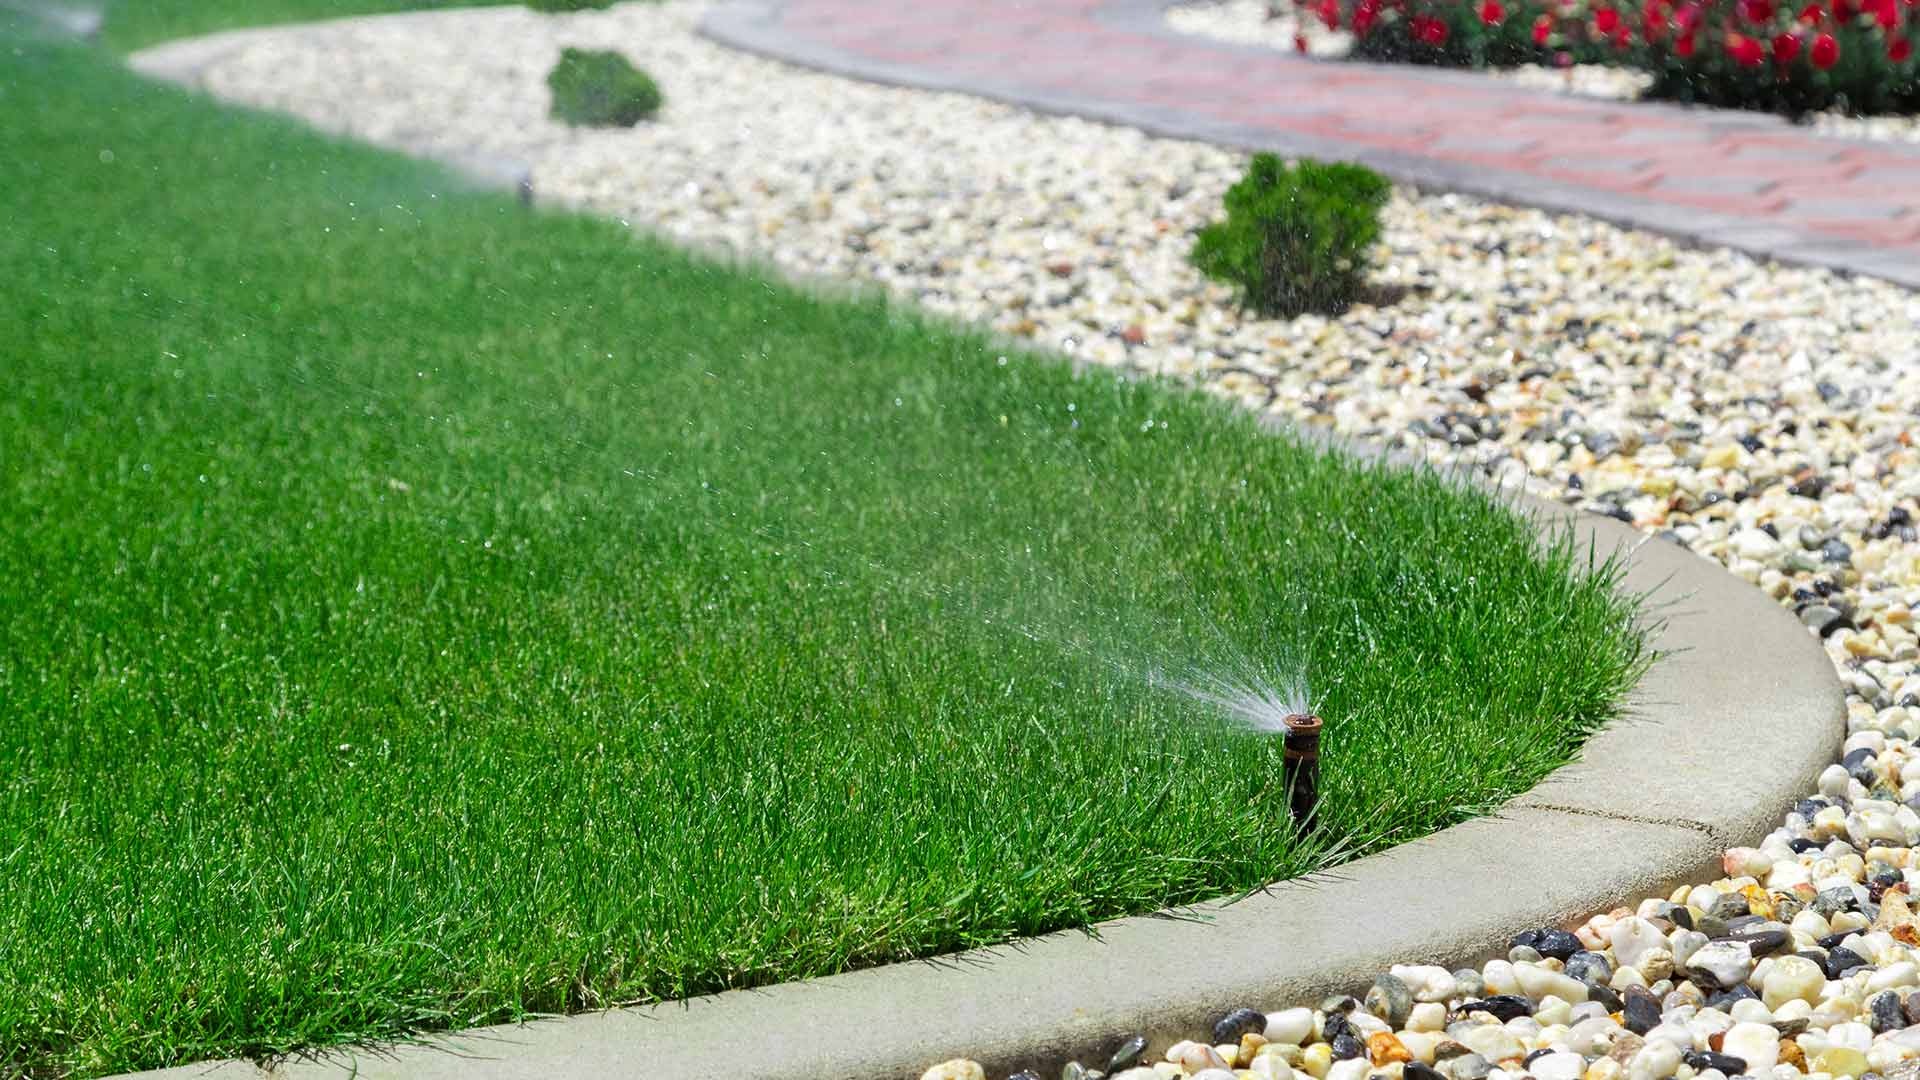 Sprinkler watering lawn around rock mulch landscaping in China Spring, TX.